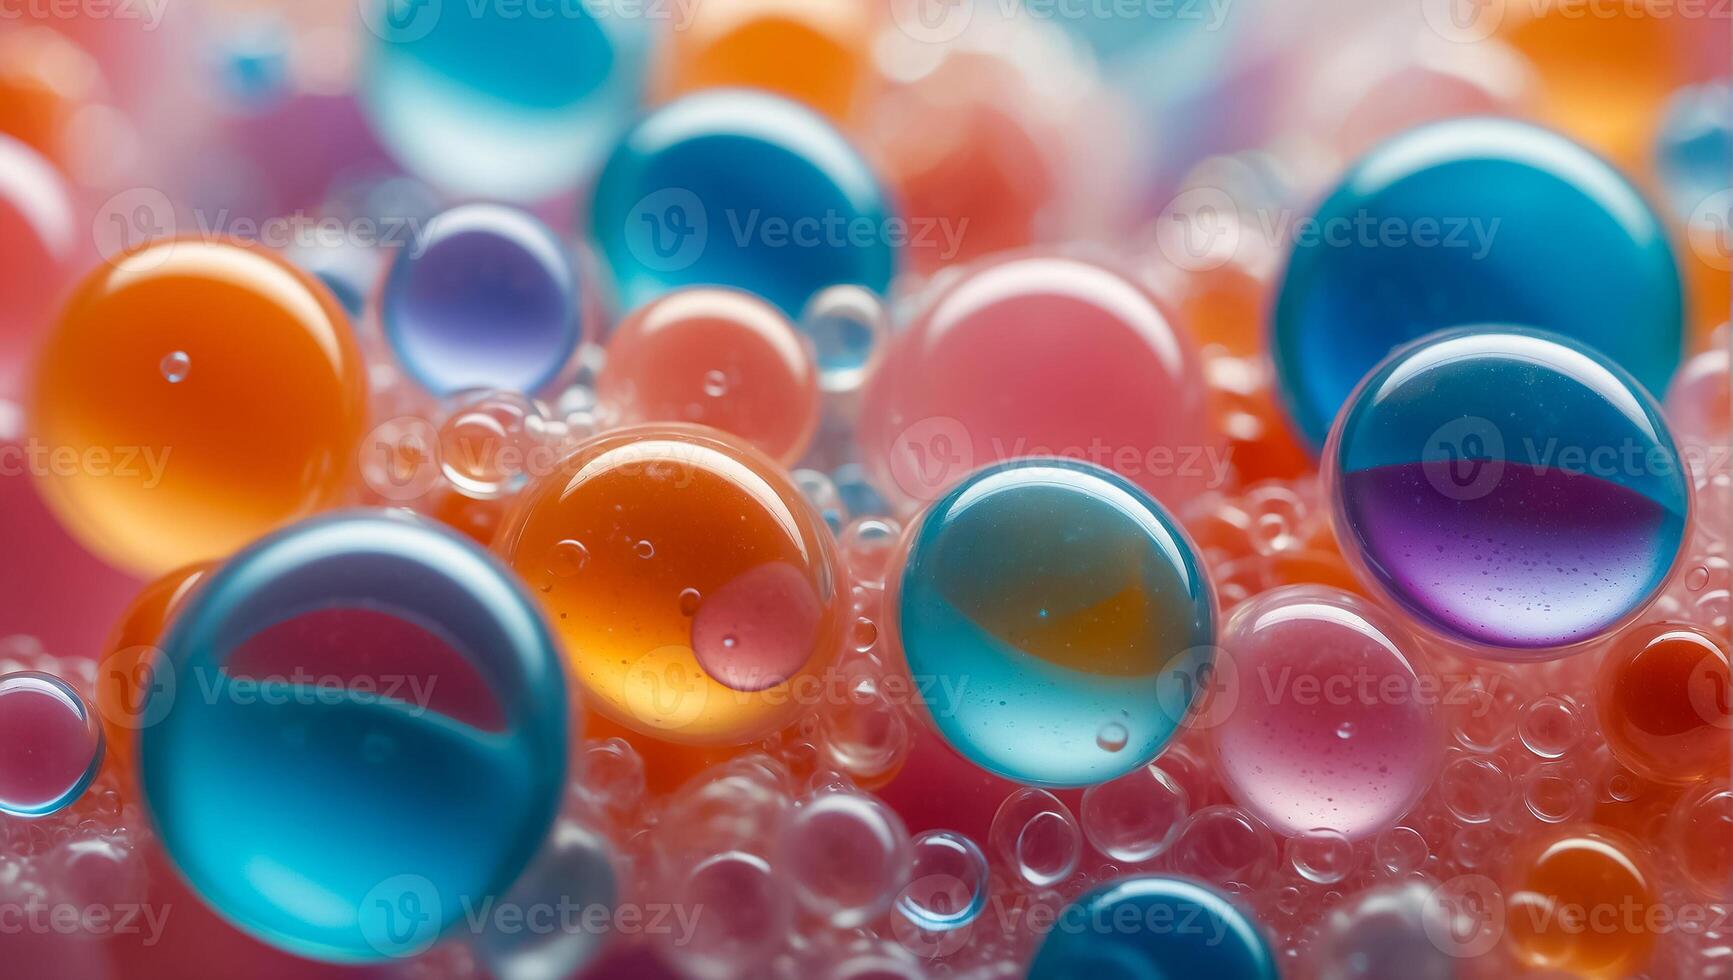 AI generated Soap colored foam bubble closeup photo